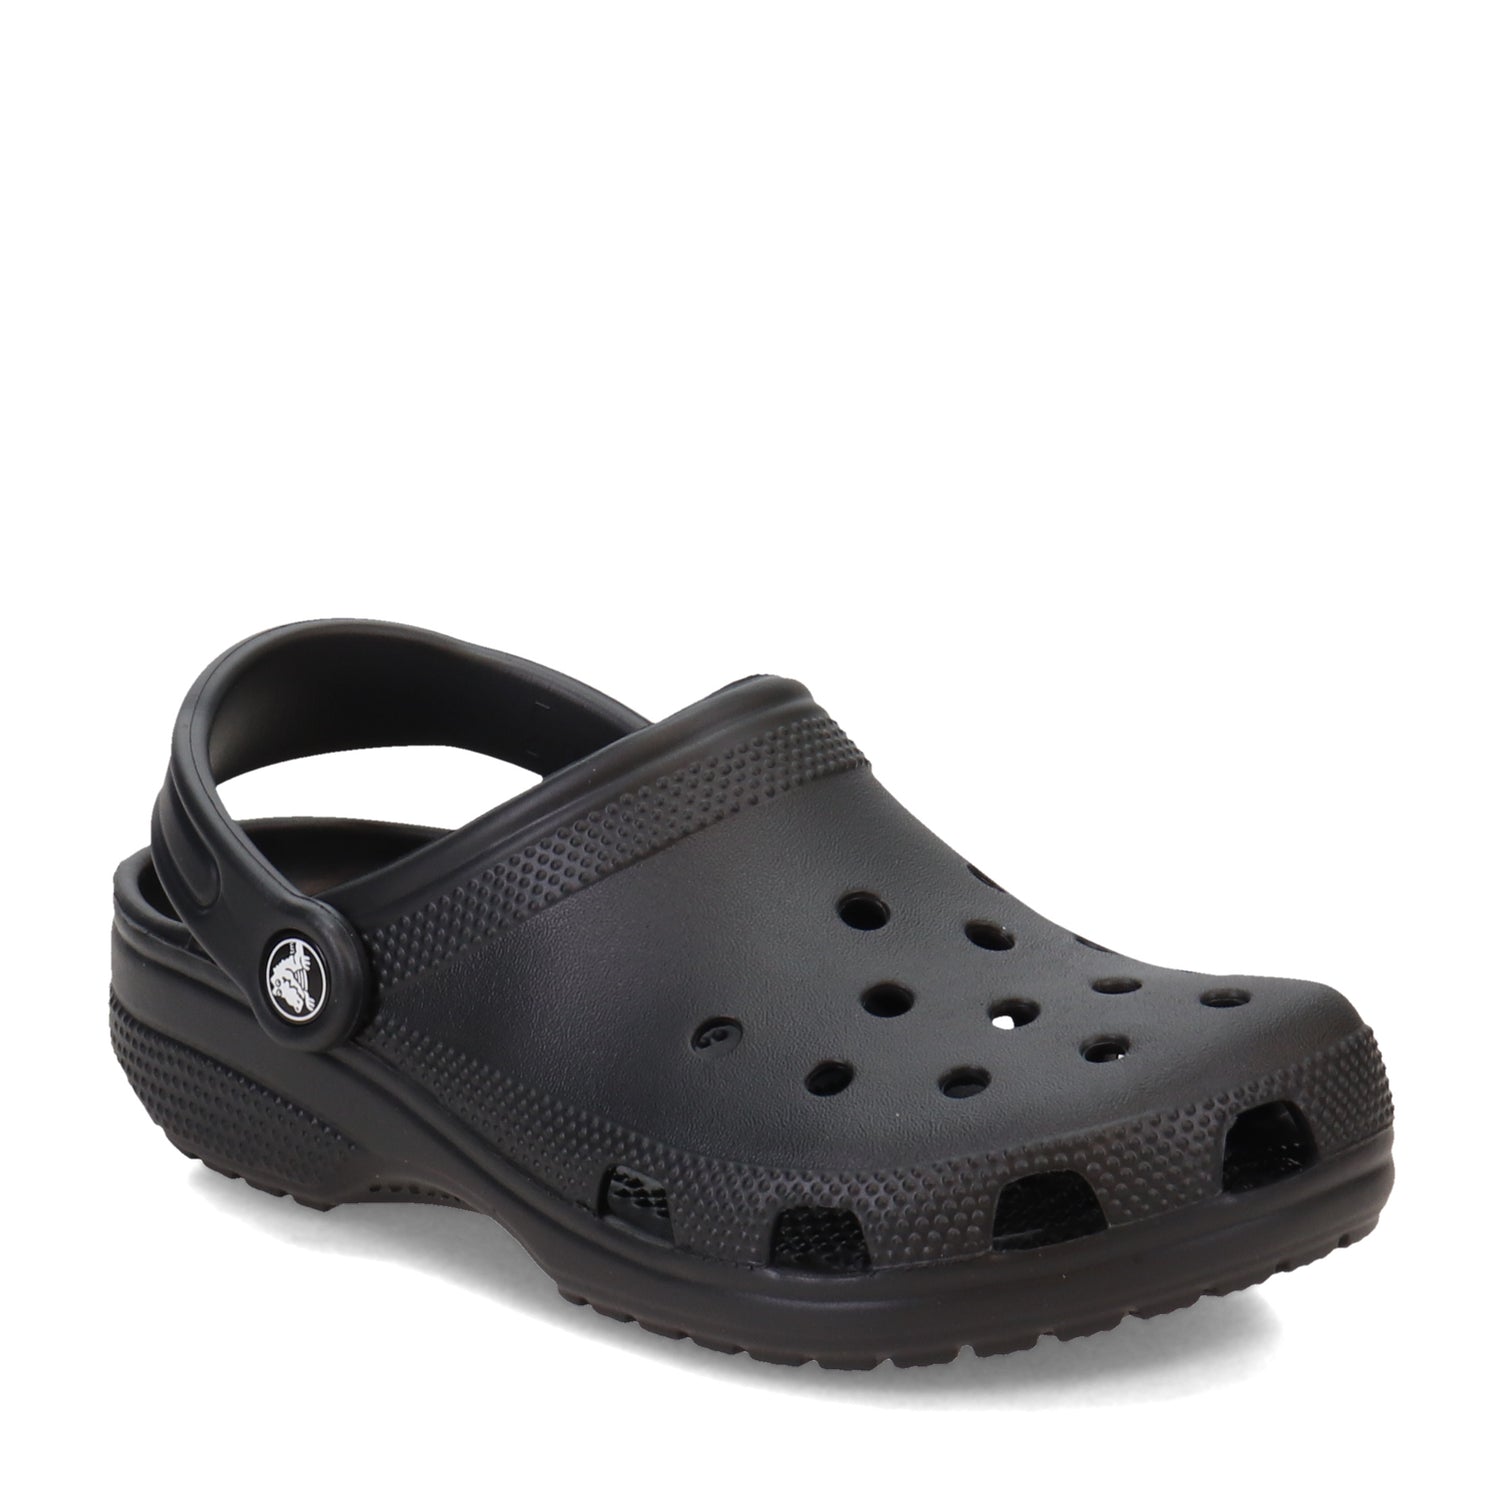 Peltz Shoes  Kid's Crocs Classic Clog - Little Kid & Big Kid Black 206991-001